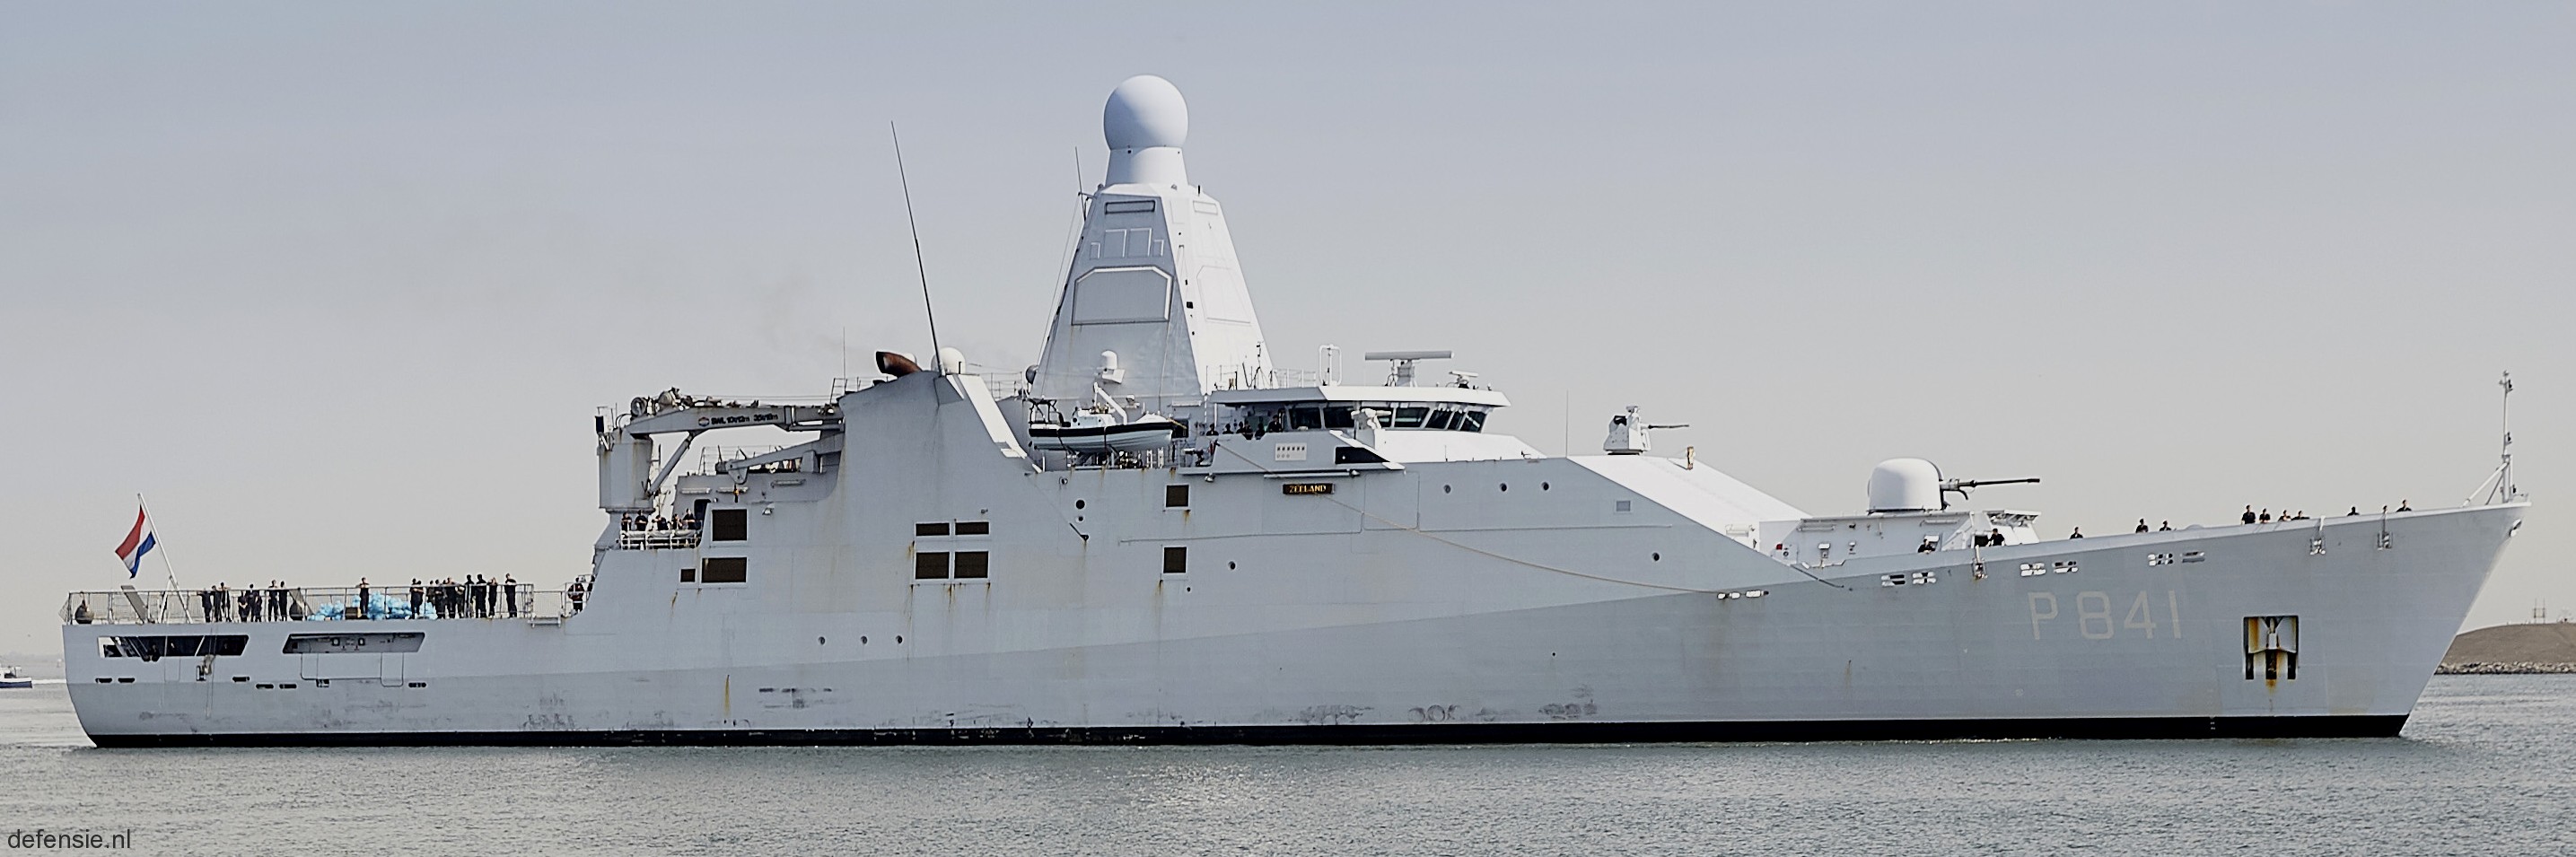 p-841 hnlms zeeland holland class offshore patrol vessel opv royal netherlands navy 09